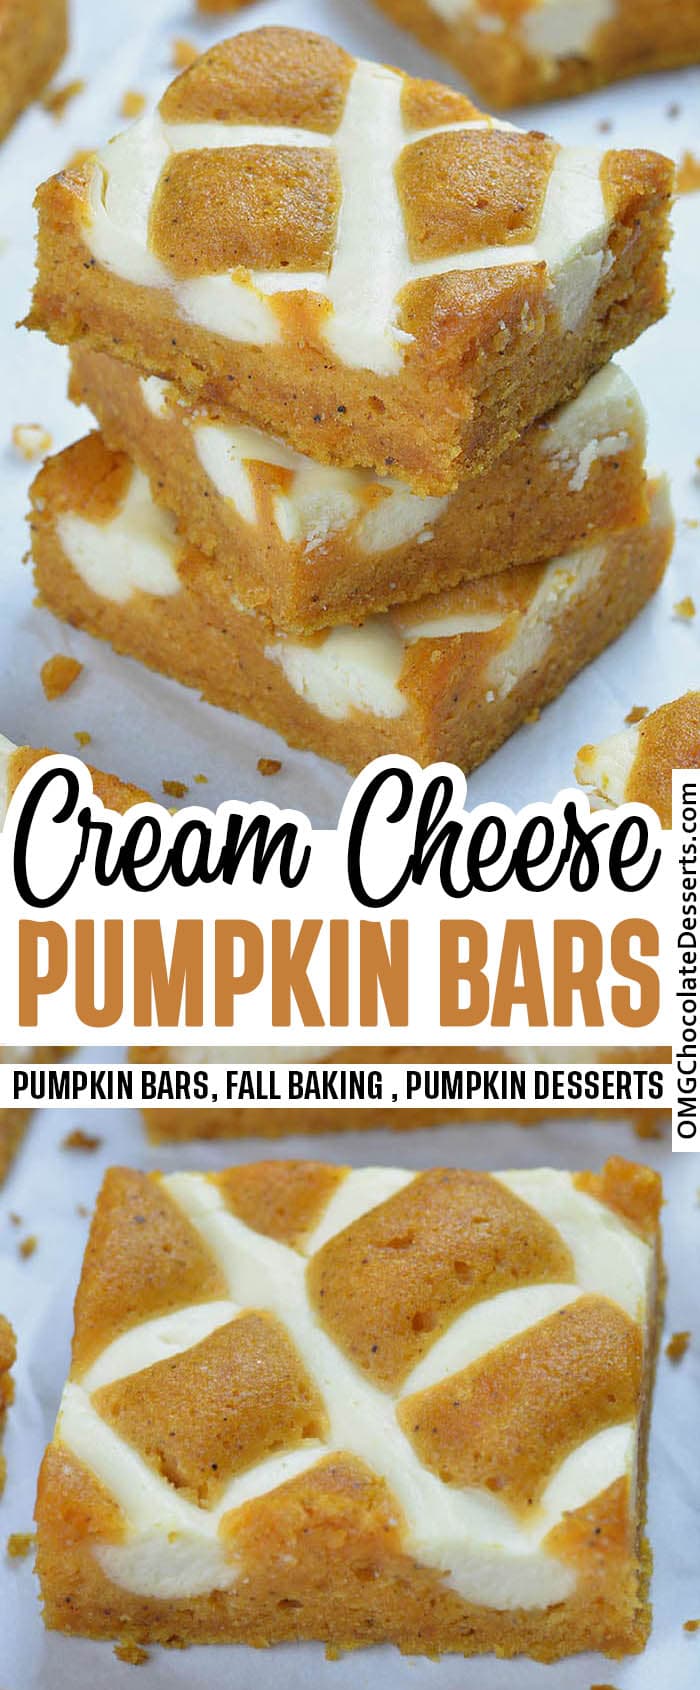 Pumpkin Bars